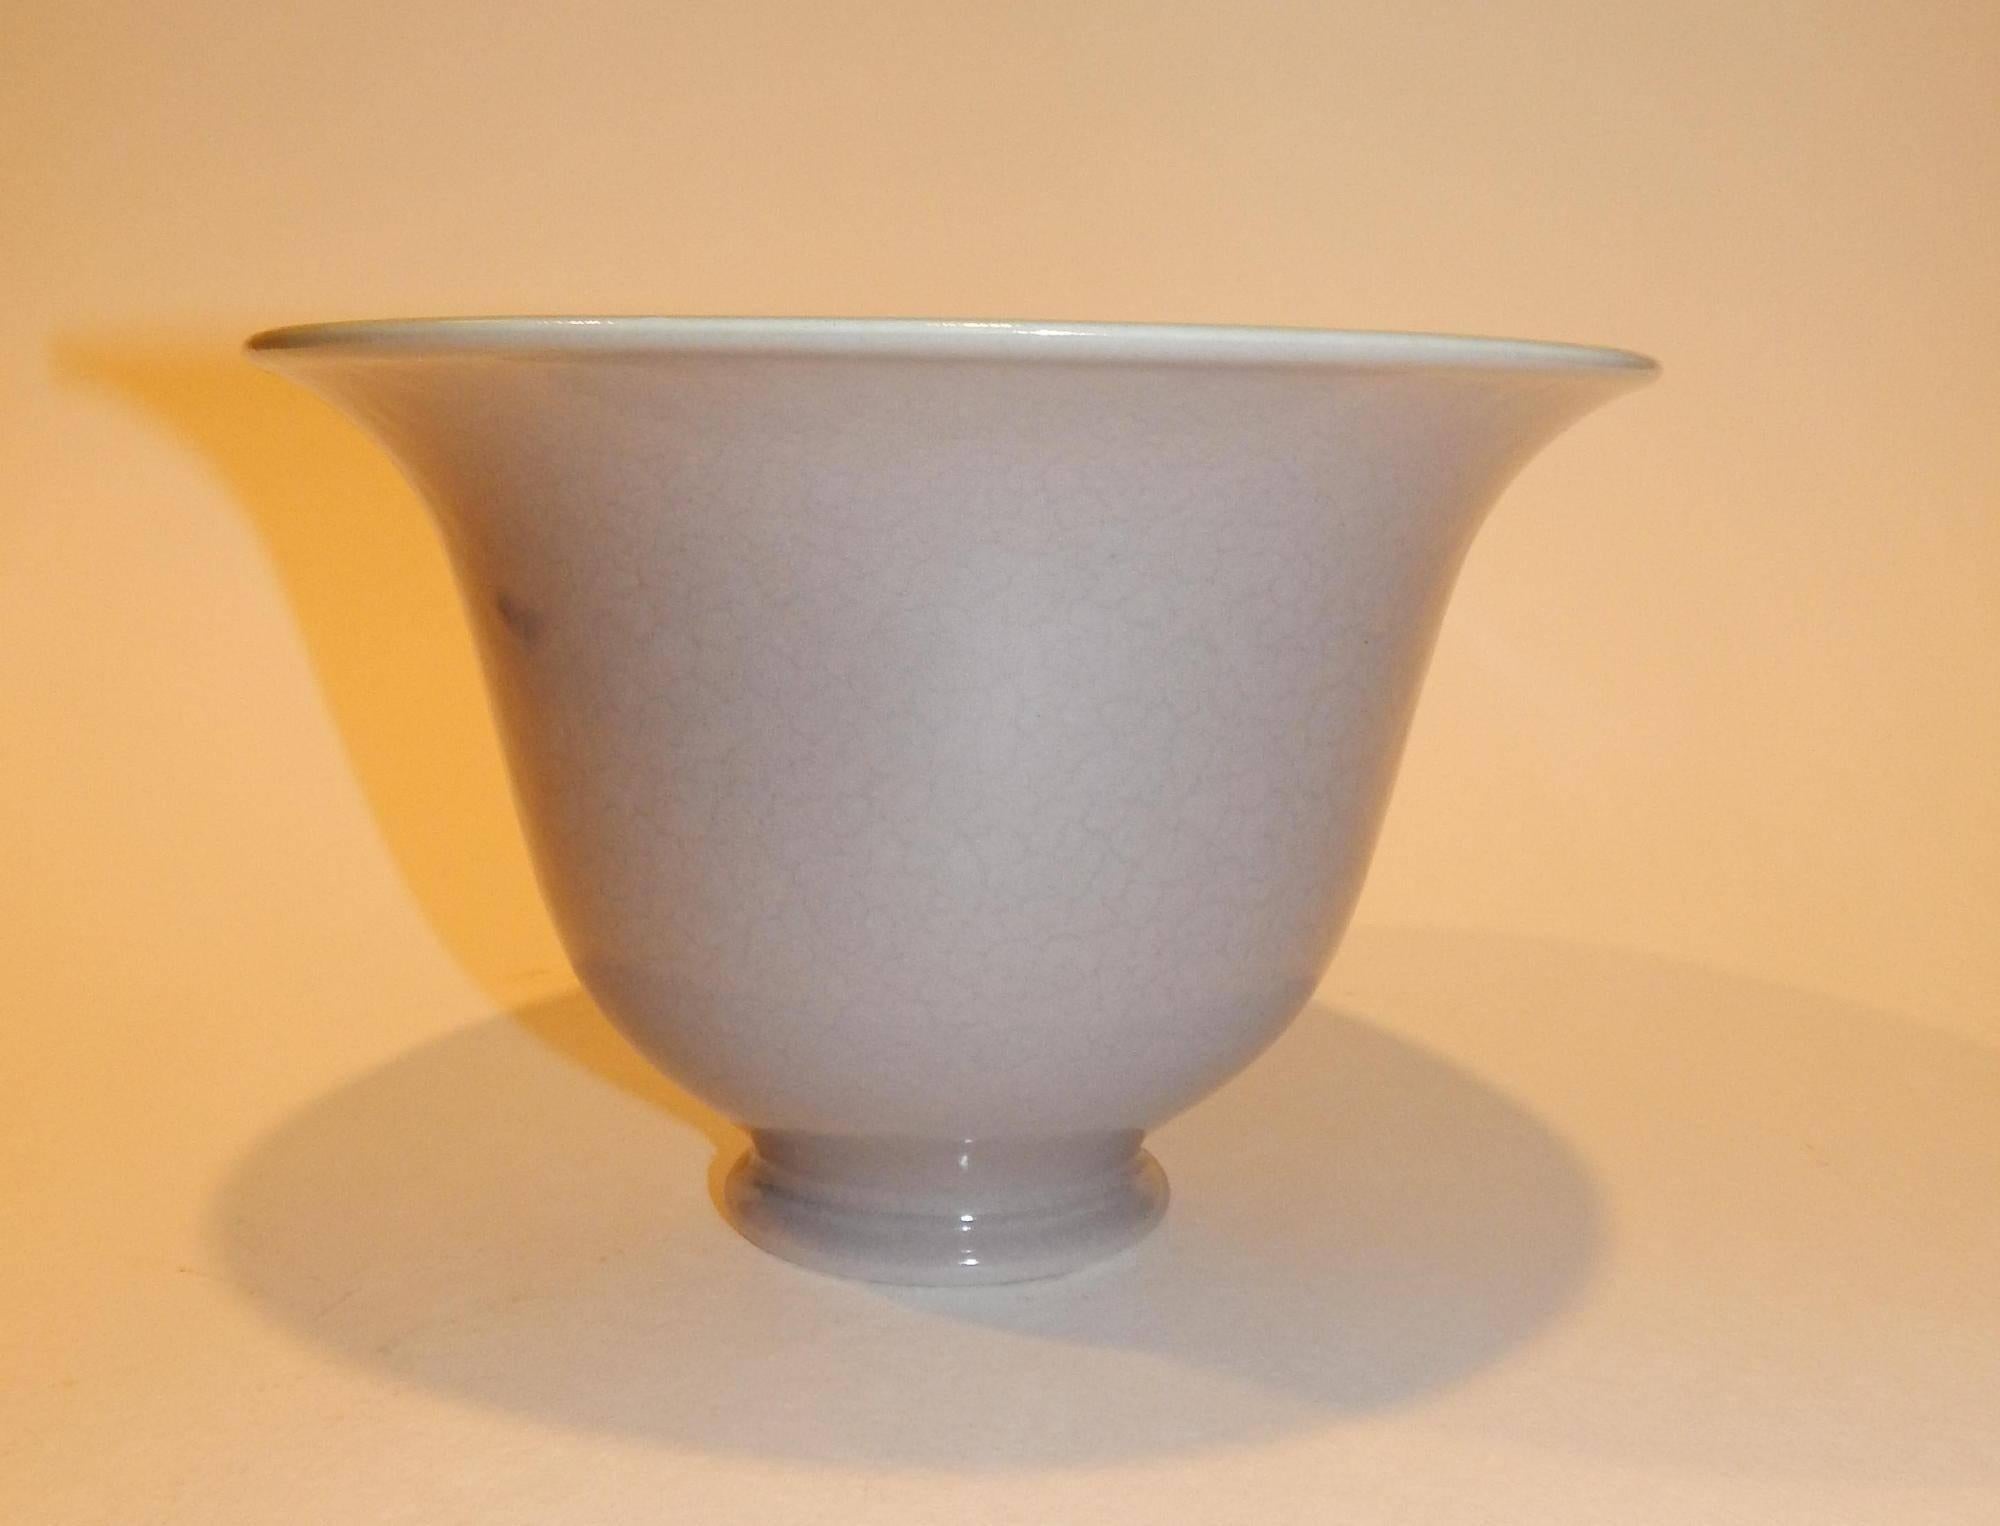 Beautiful design - rookwood flared bowl.
Measures: 5